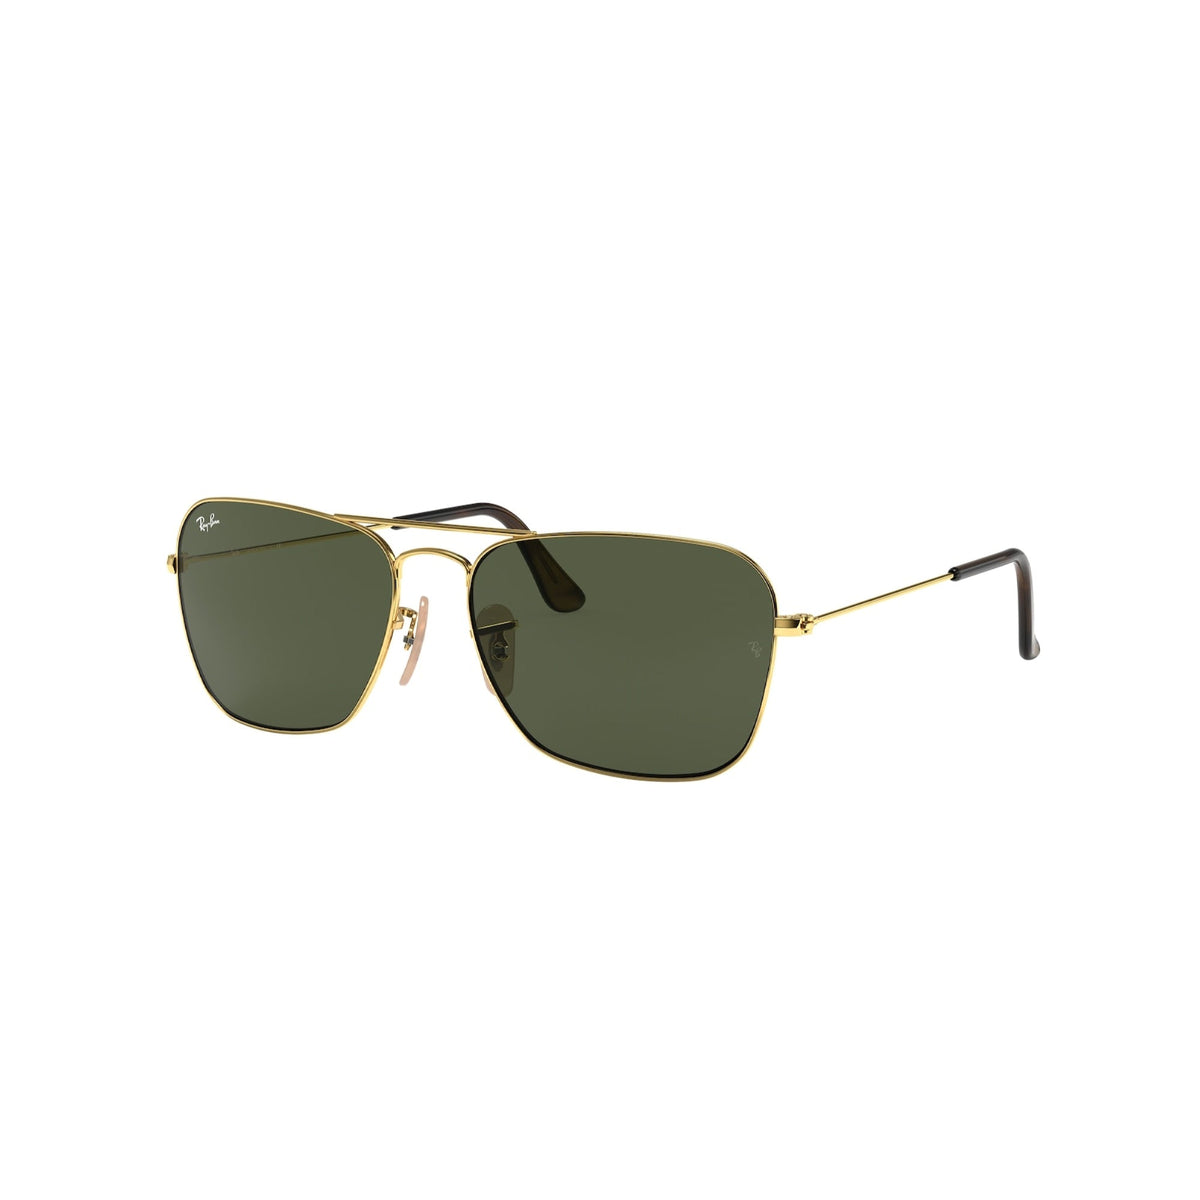 Ray-Ban Unisex Sunglasses Caravan Gold G-15 Green Metal Metal  0RB3136 181 58